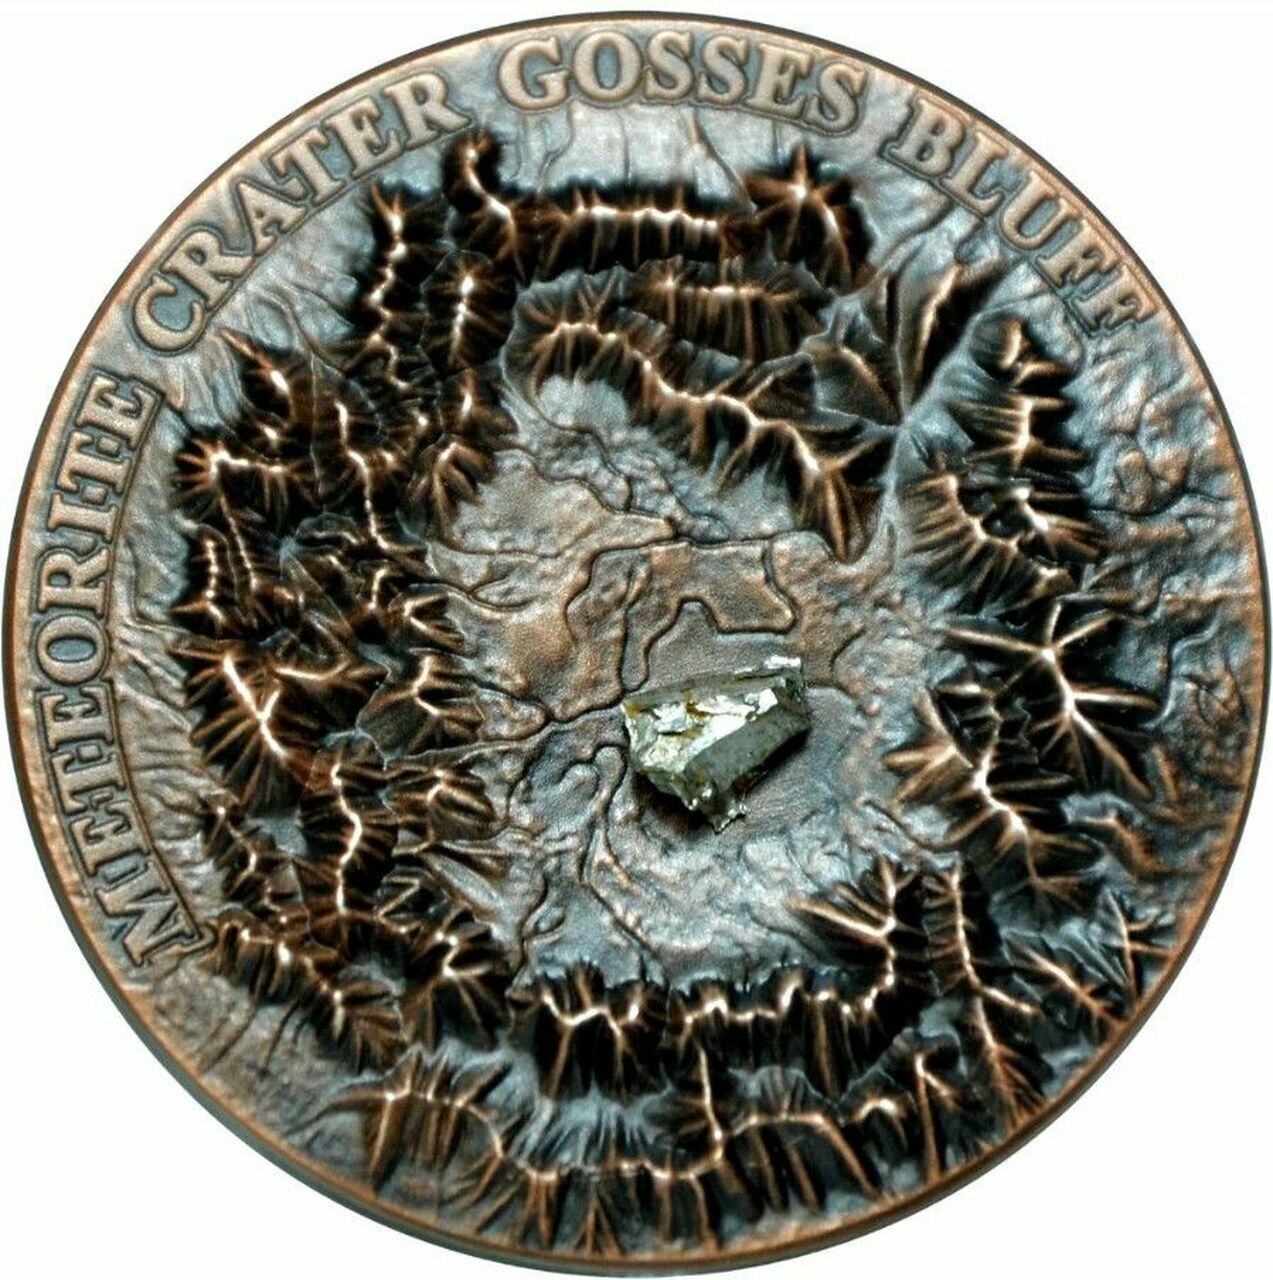 Niue, Crater Meteorites, Gosses Bluff (2017) 1oz silver coin (1 NZ$)